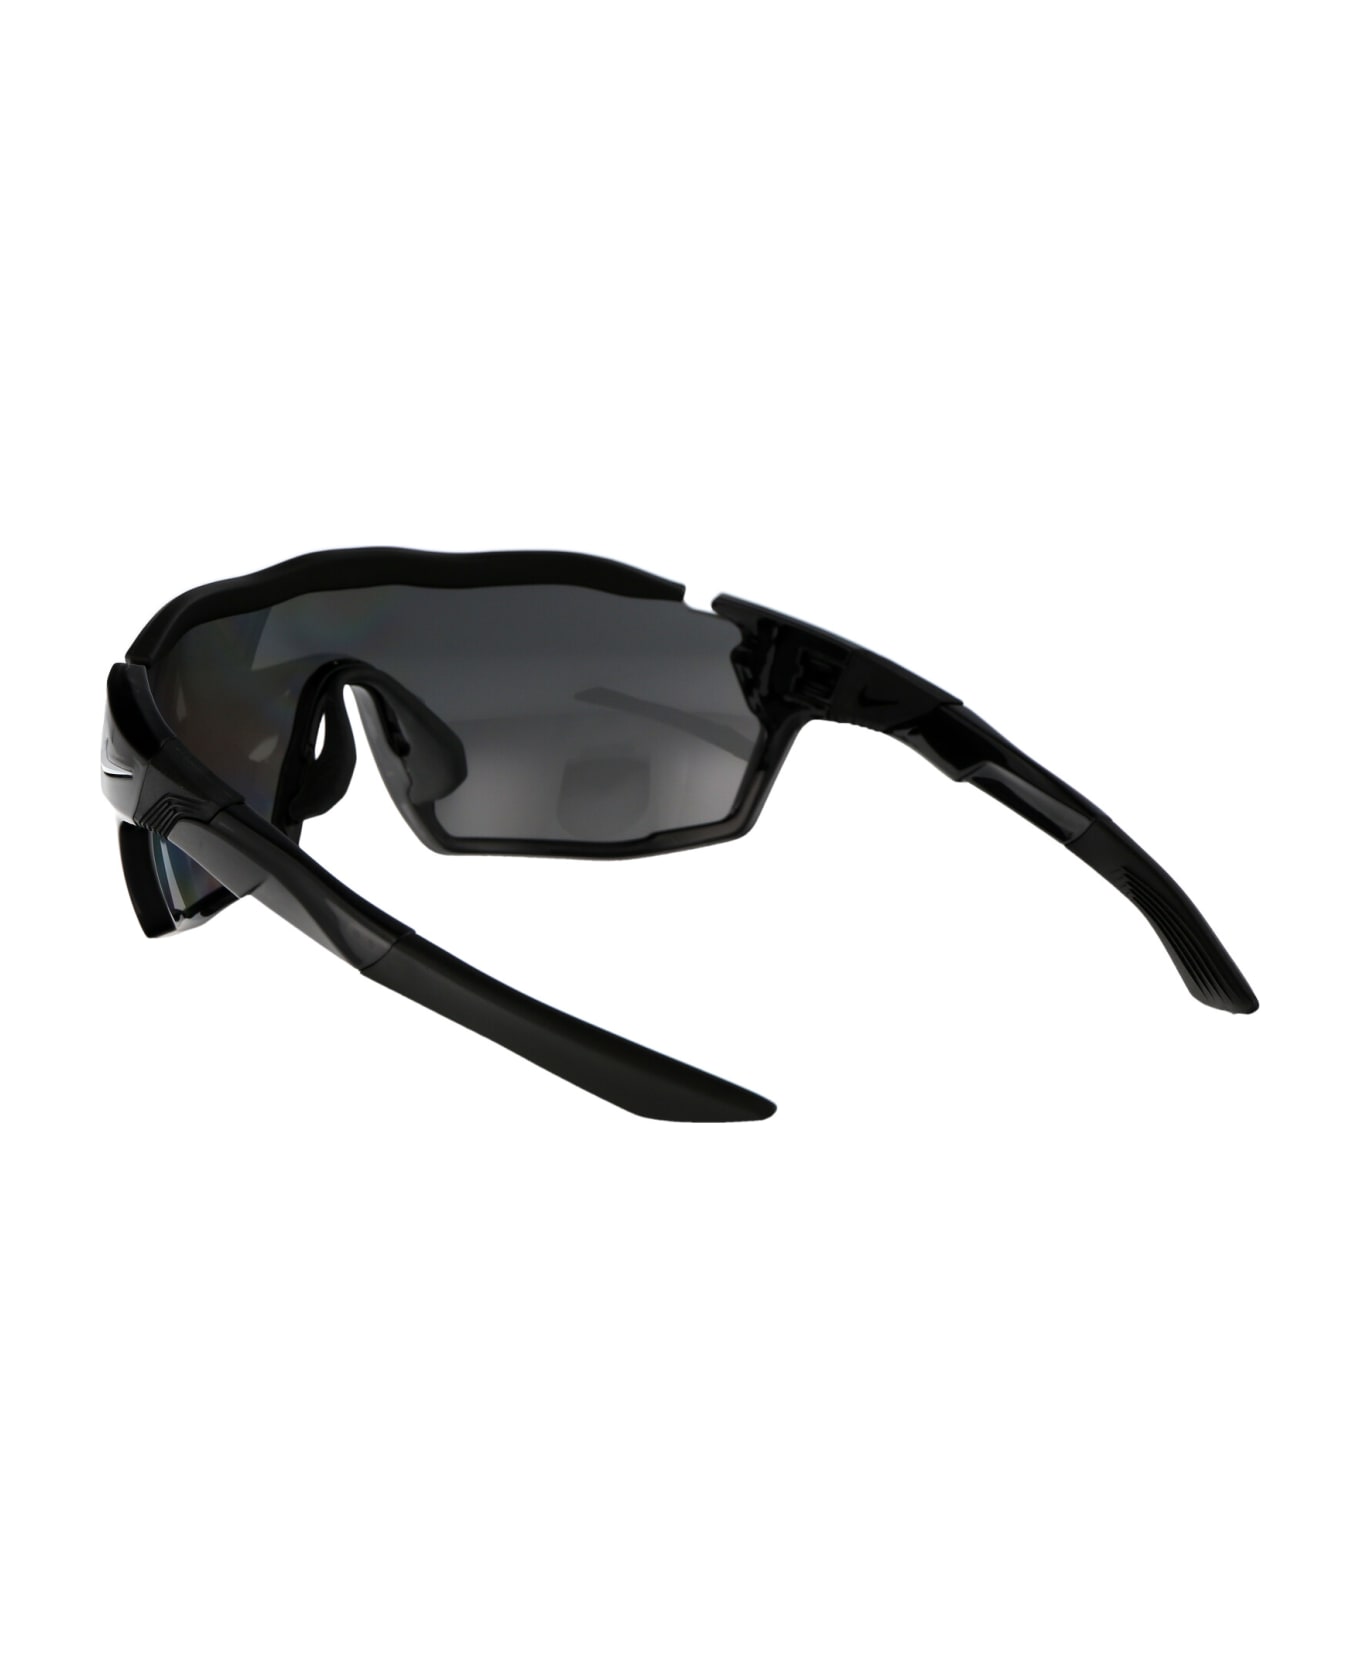 Nike Show X Rush Sunglasses - 060 ANTHRACITE GRIS サングラス